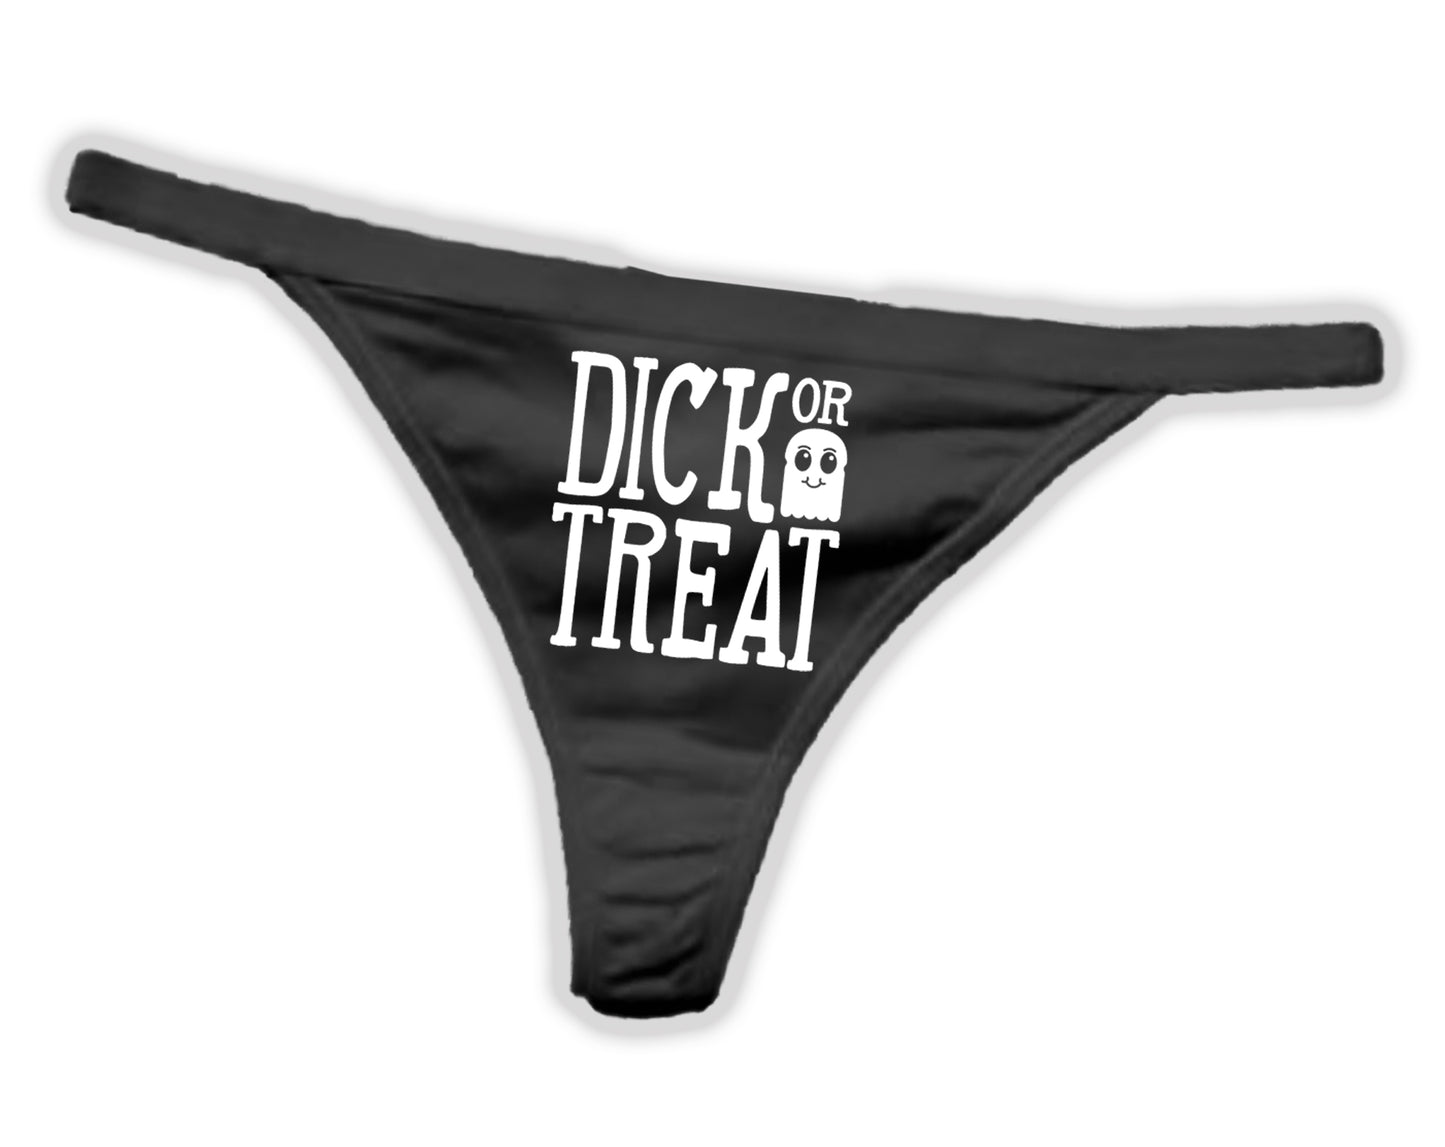 Dick or Treat Panties